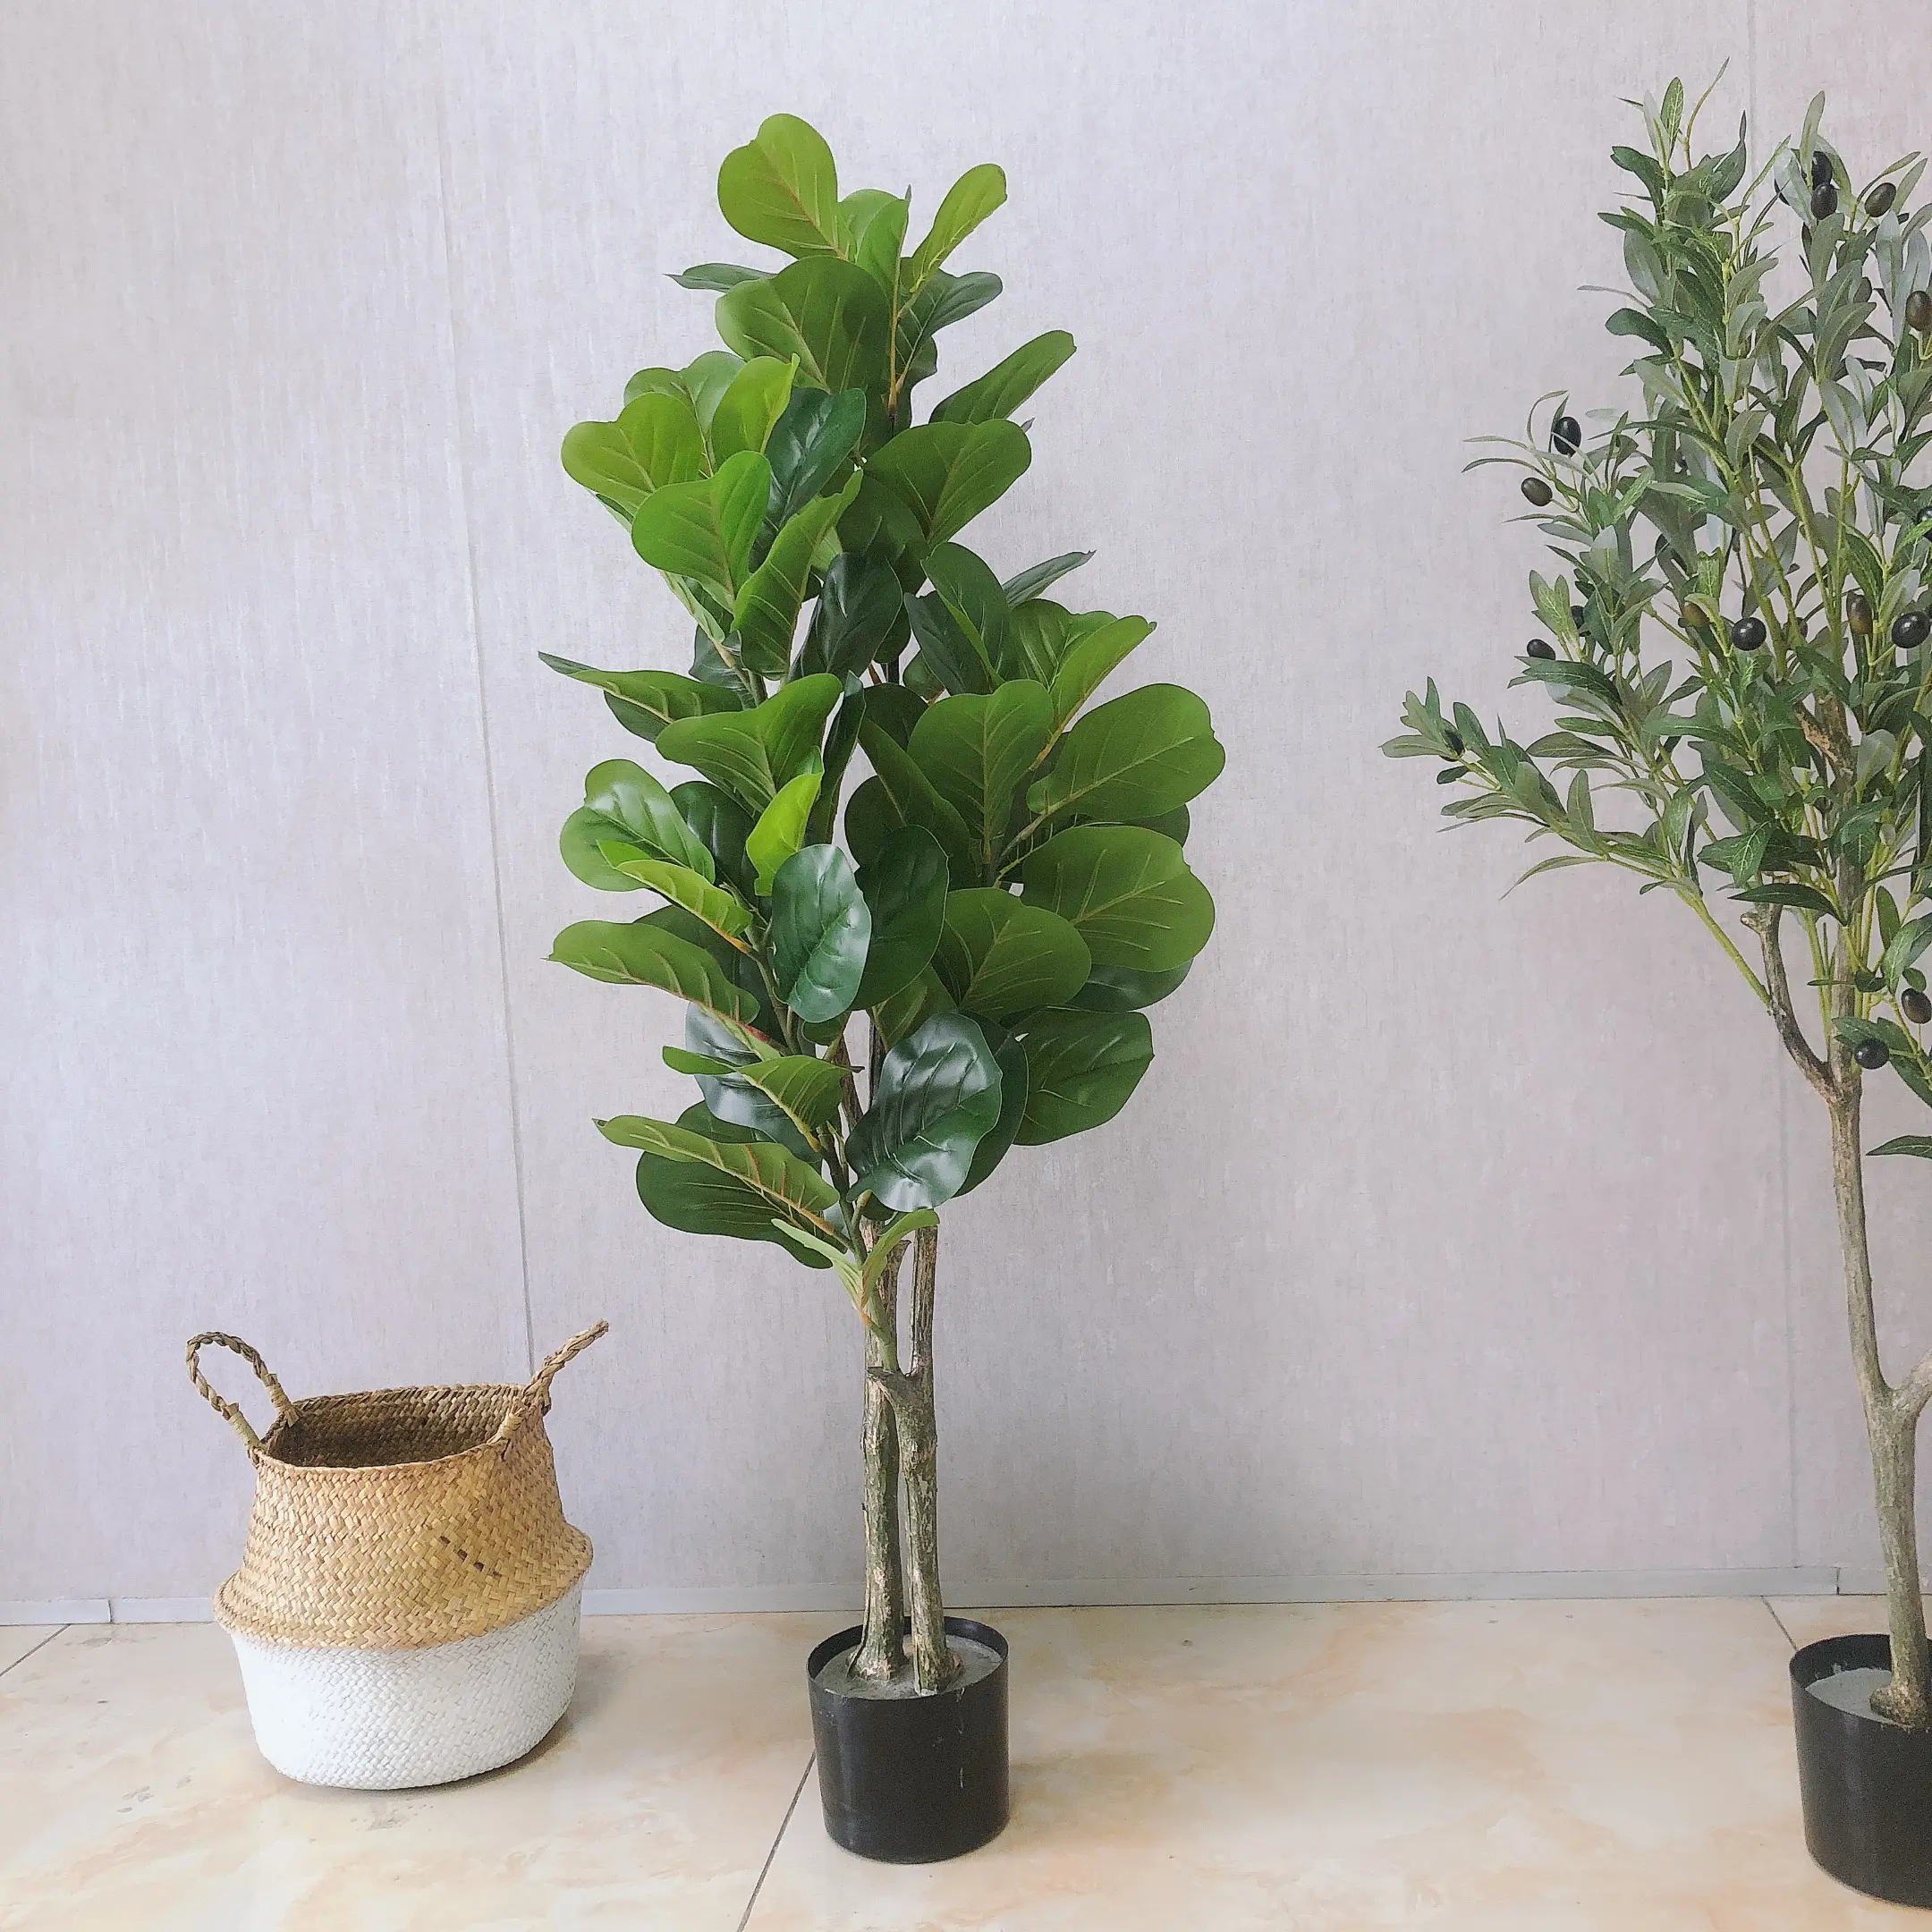 Plante vente en gros, décor de jardin, arbre artificiel, bonsaï